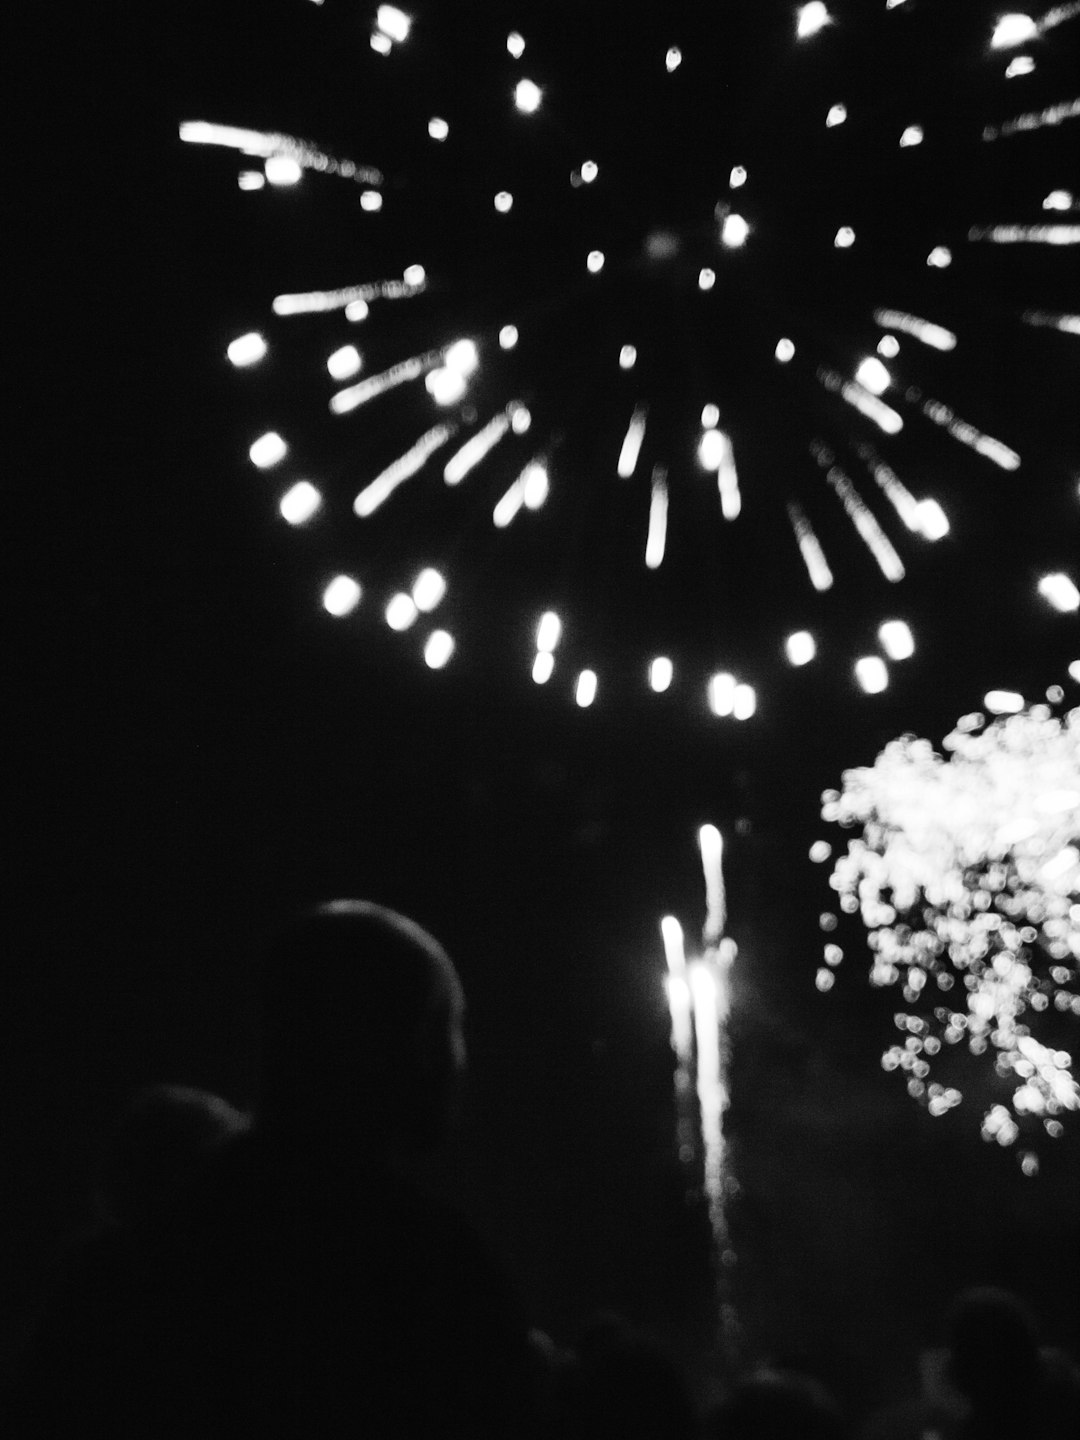 fireworks display